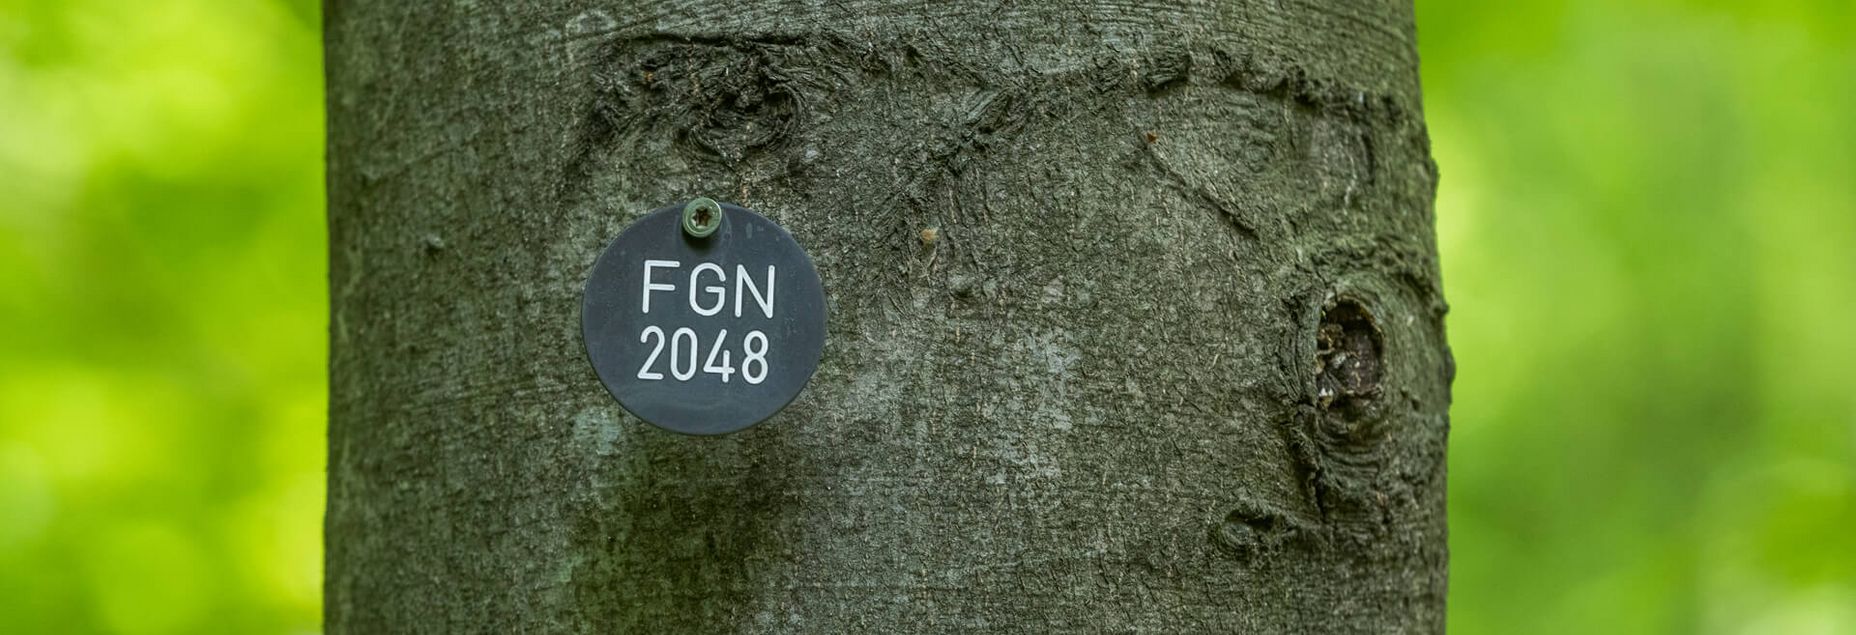 Baum FGN 2048 - Plakette